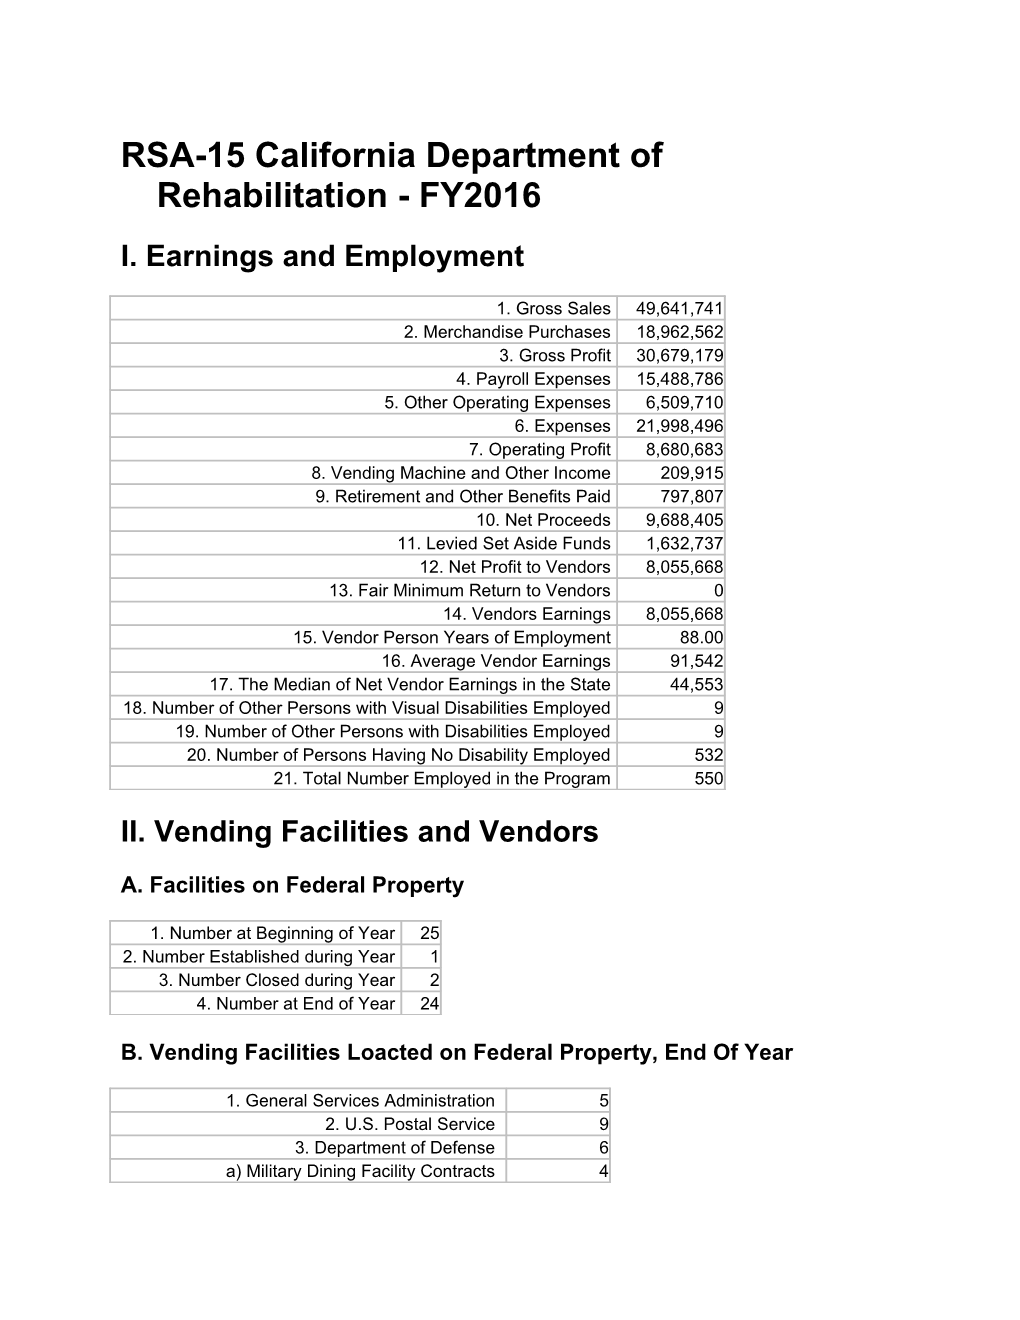 RSA-15 California Department of Rehabilitation - FY2016